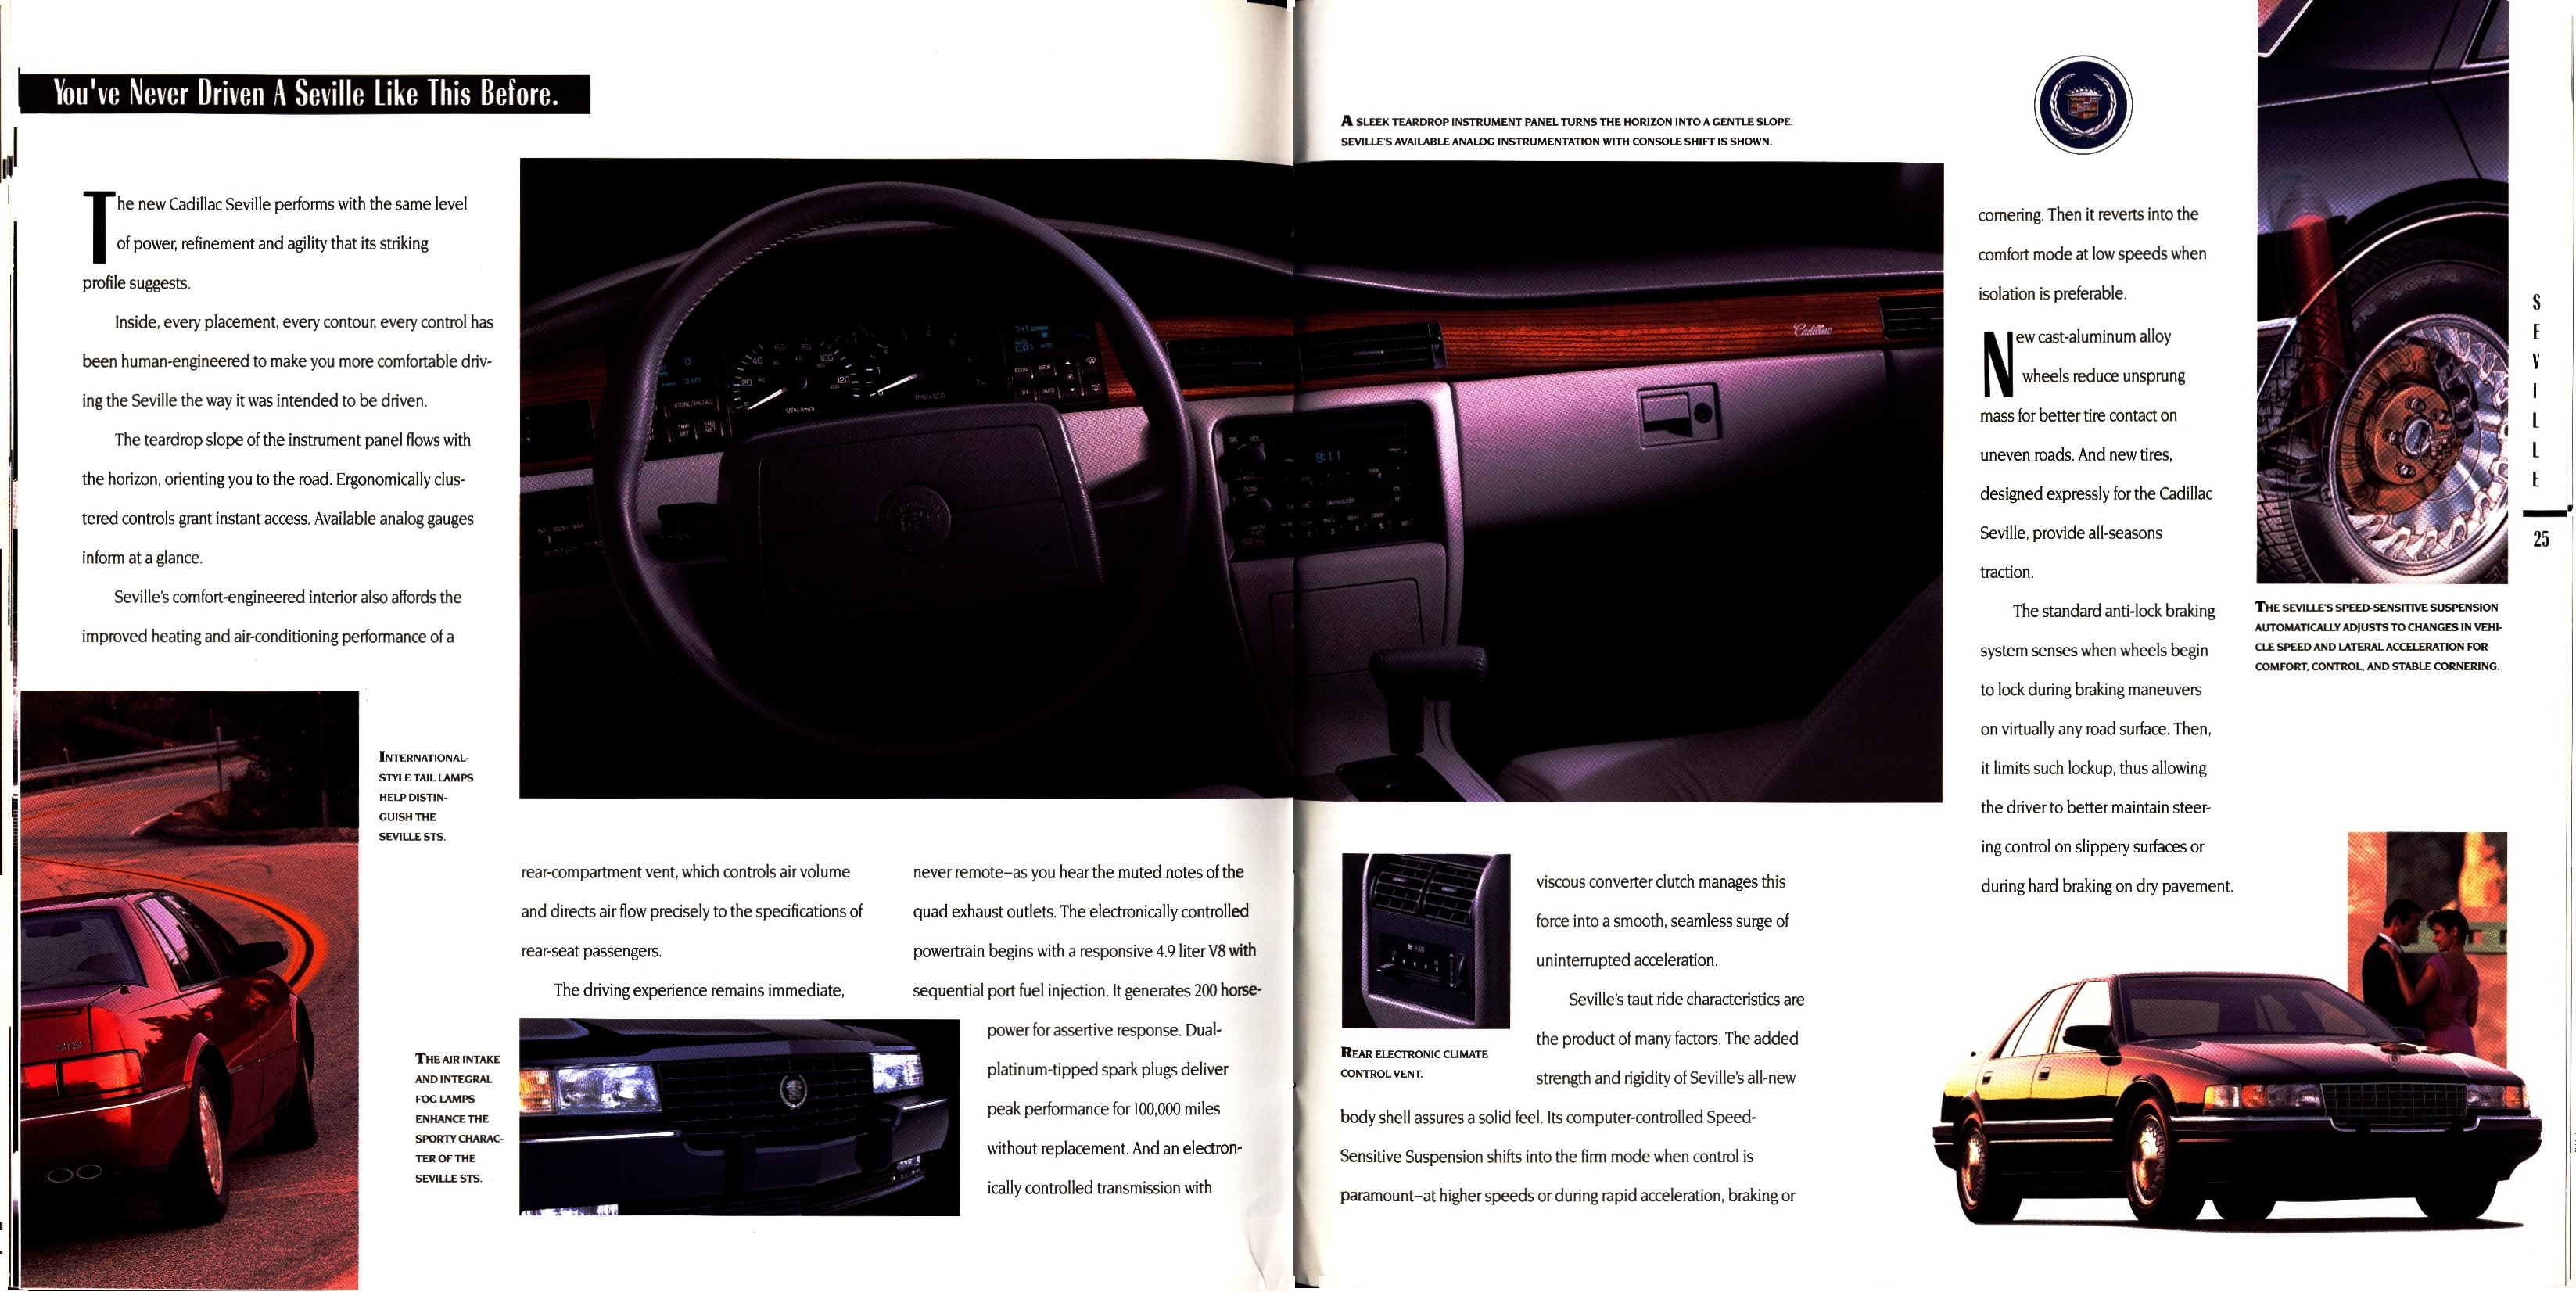 1992 Cadillac Full Line Prestige Brochure 24-25